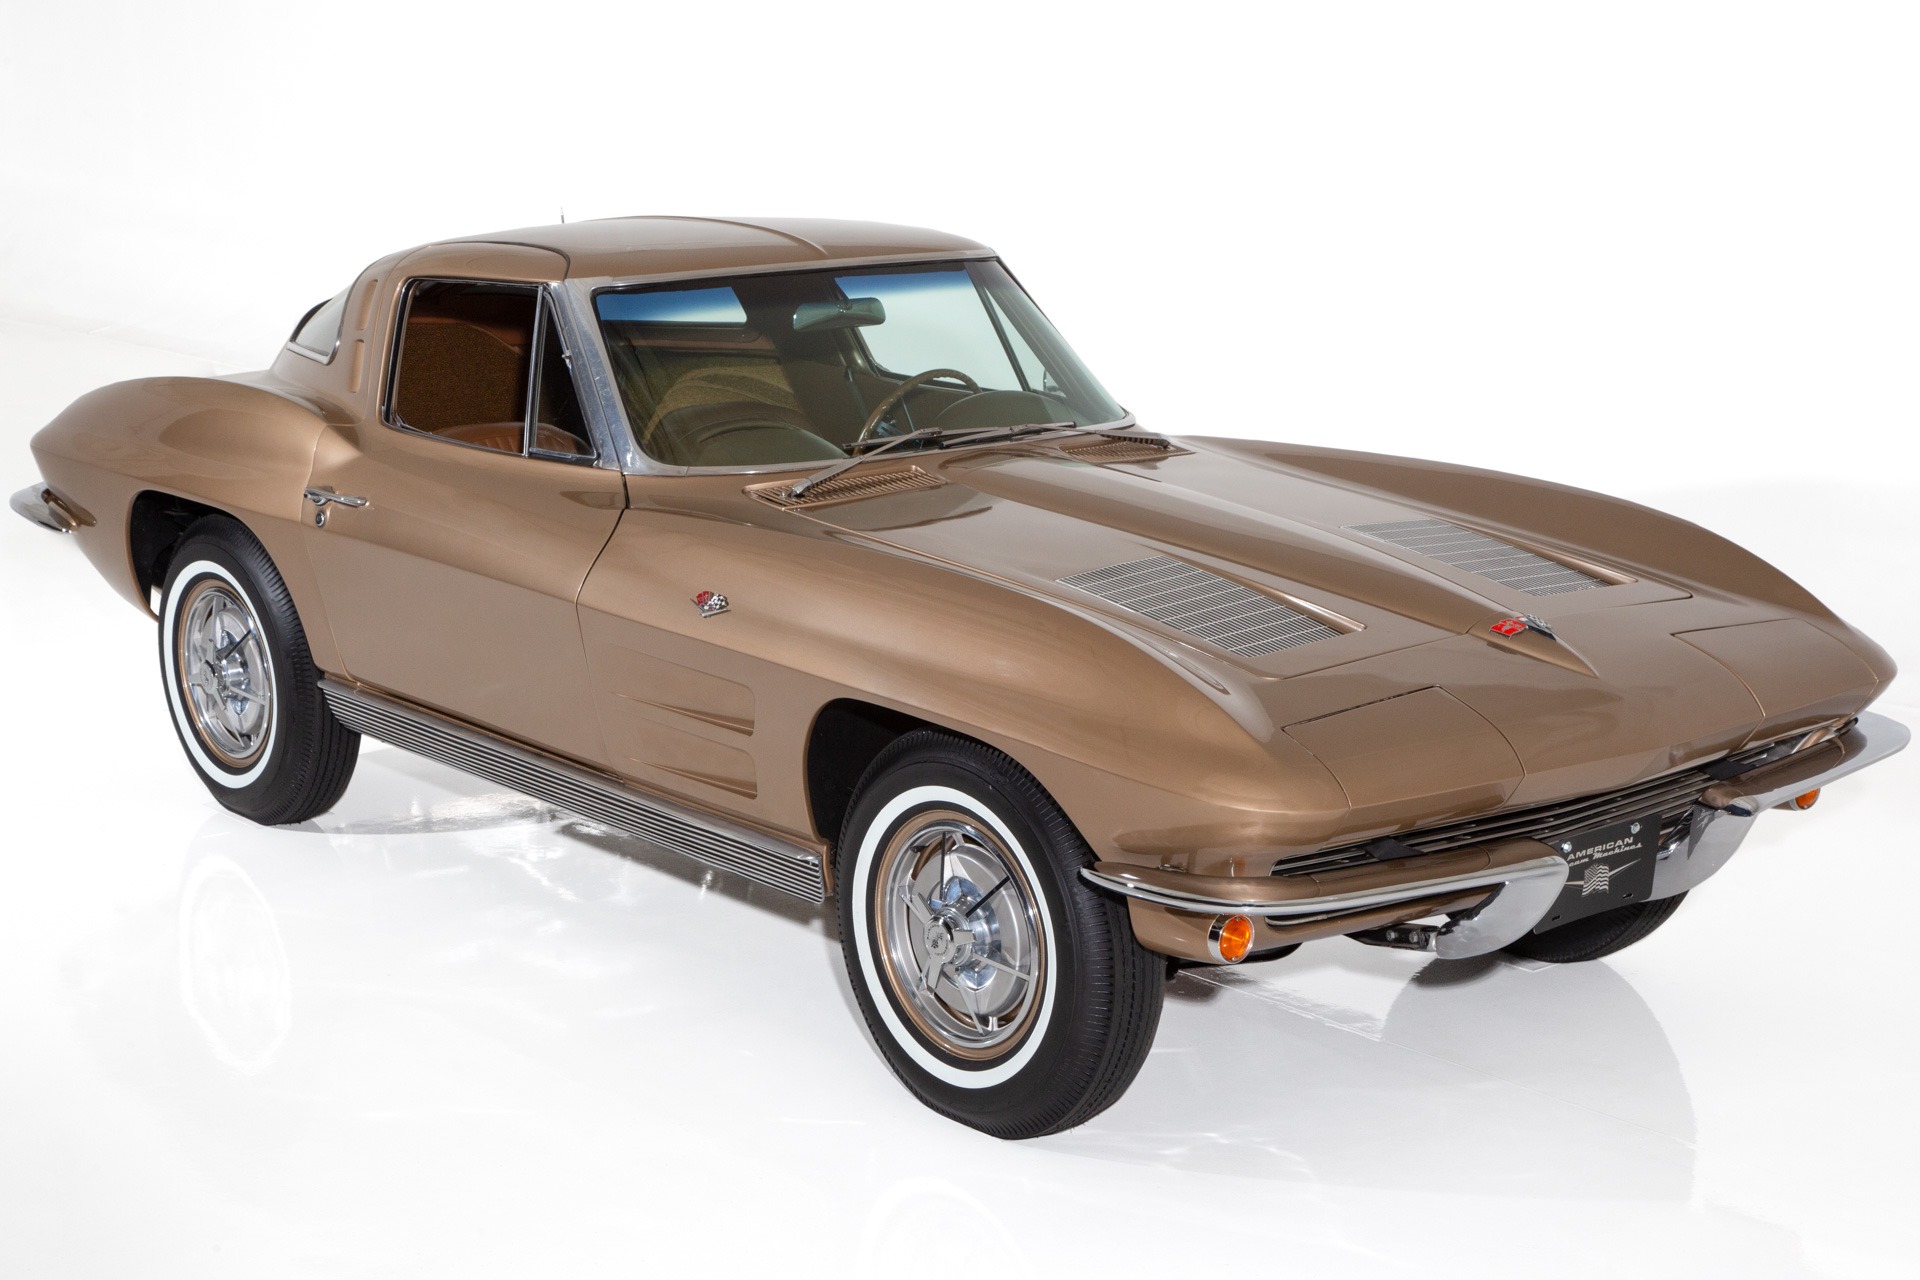 For Sale Used 1963 Chevrolet Corvette Frame off, Split Window | American Dream Machines Des Moines IA 50309